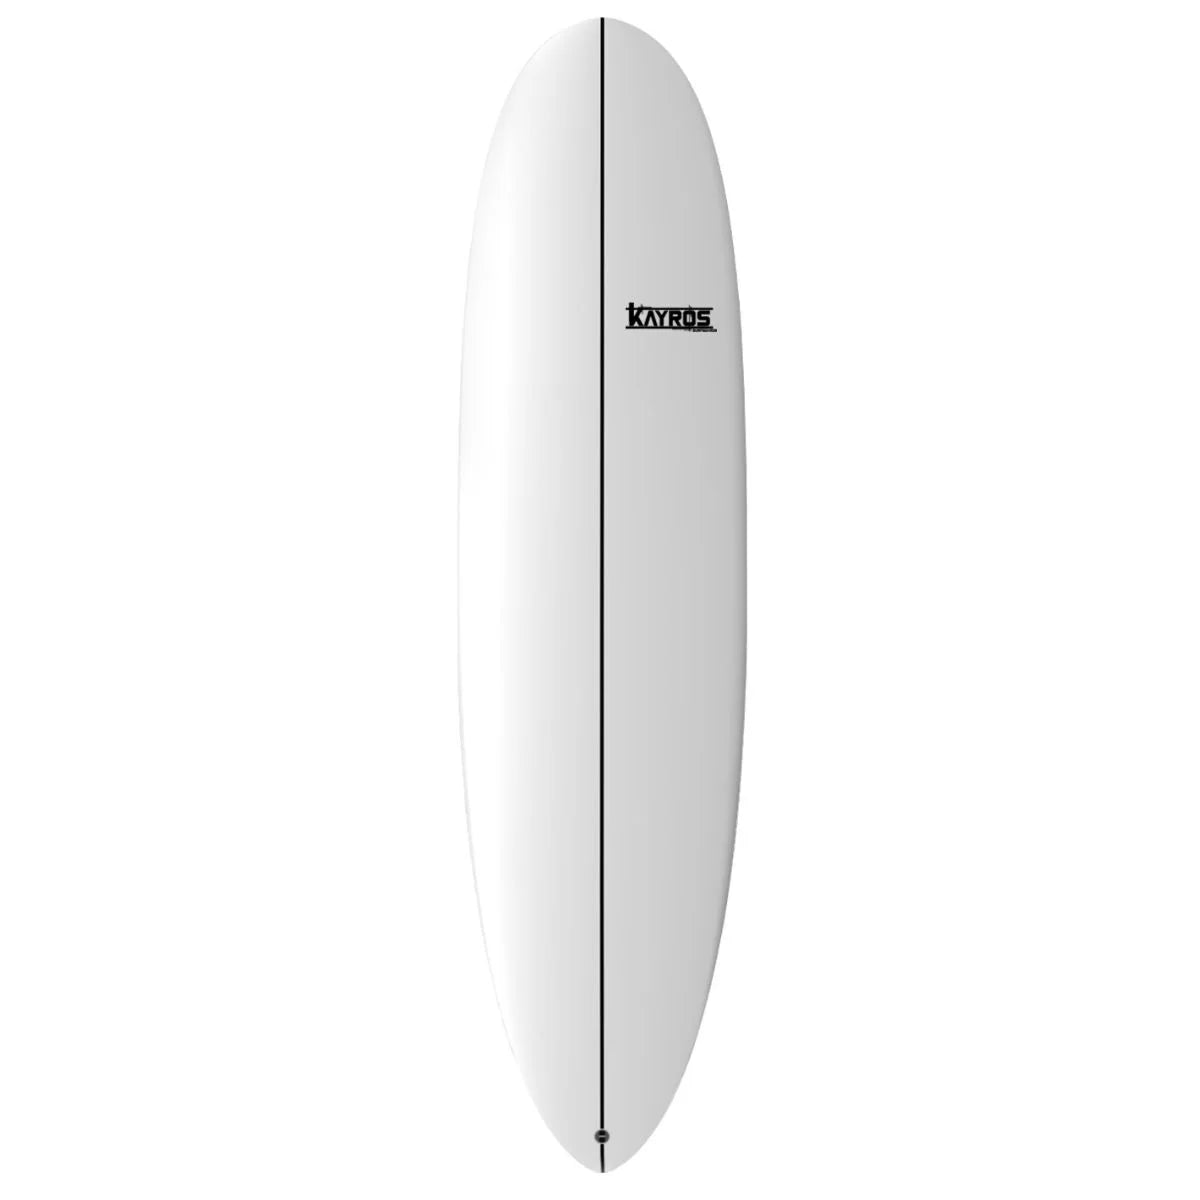 Minimalibú | Kayros Surfboards